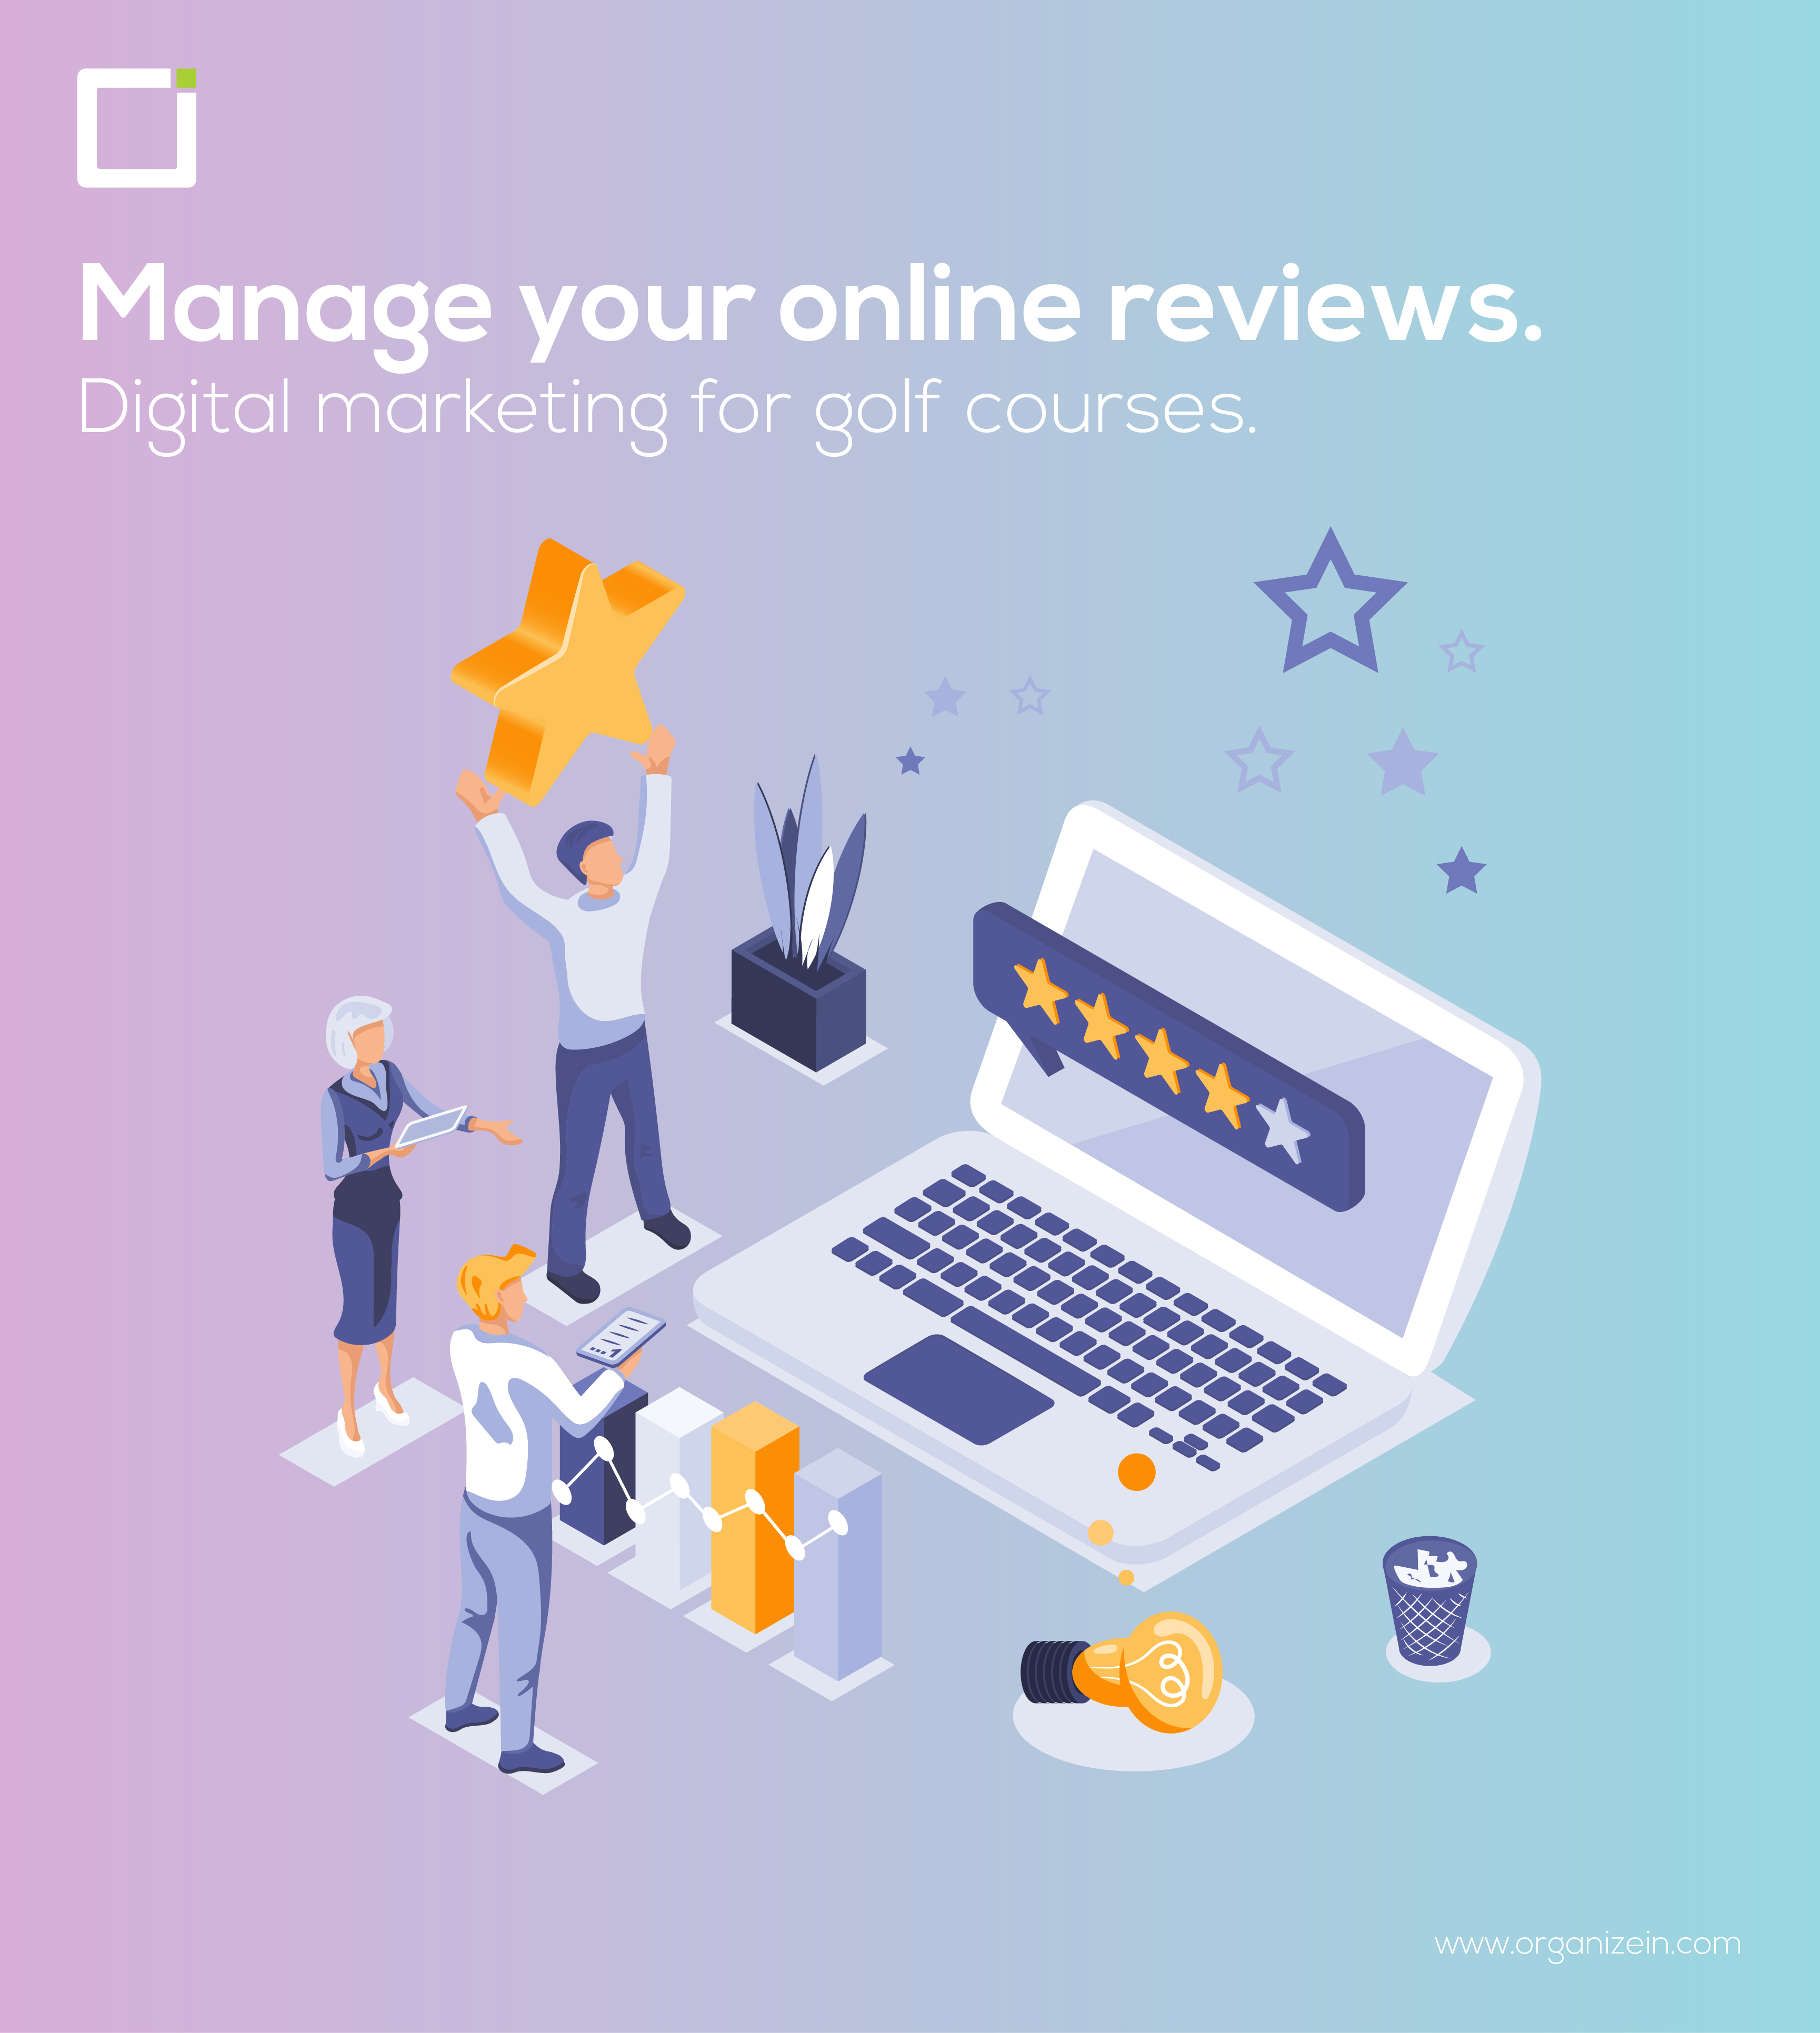 Digital marketing for golf courses